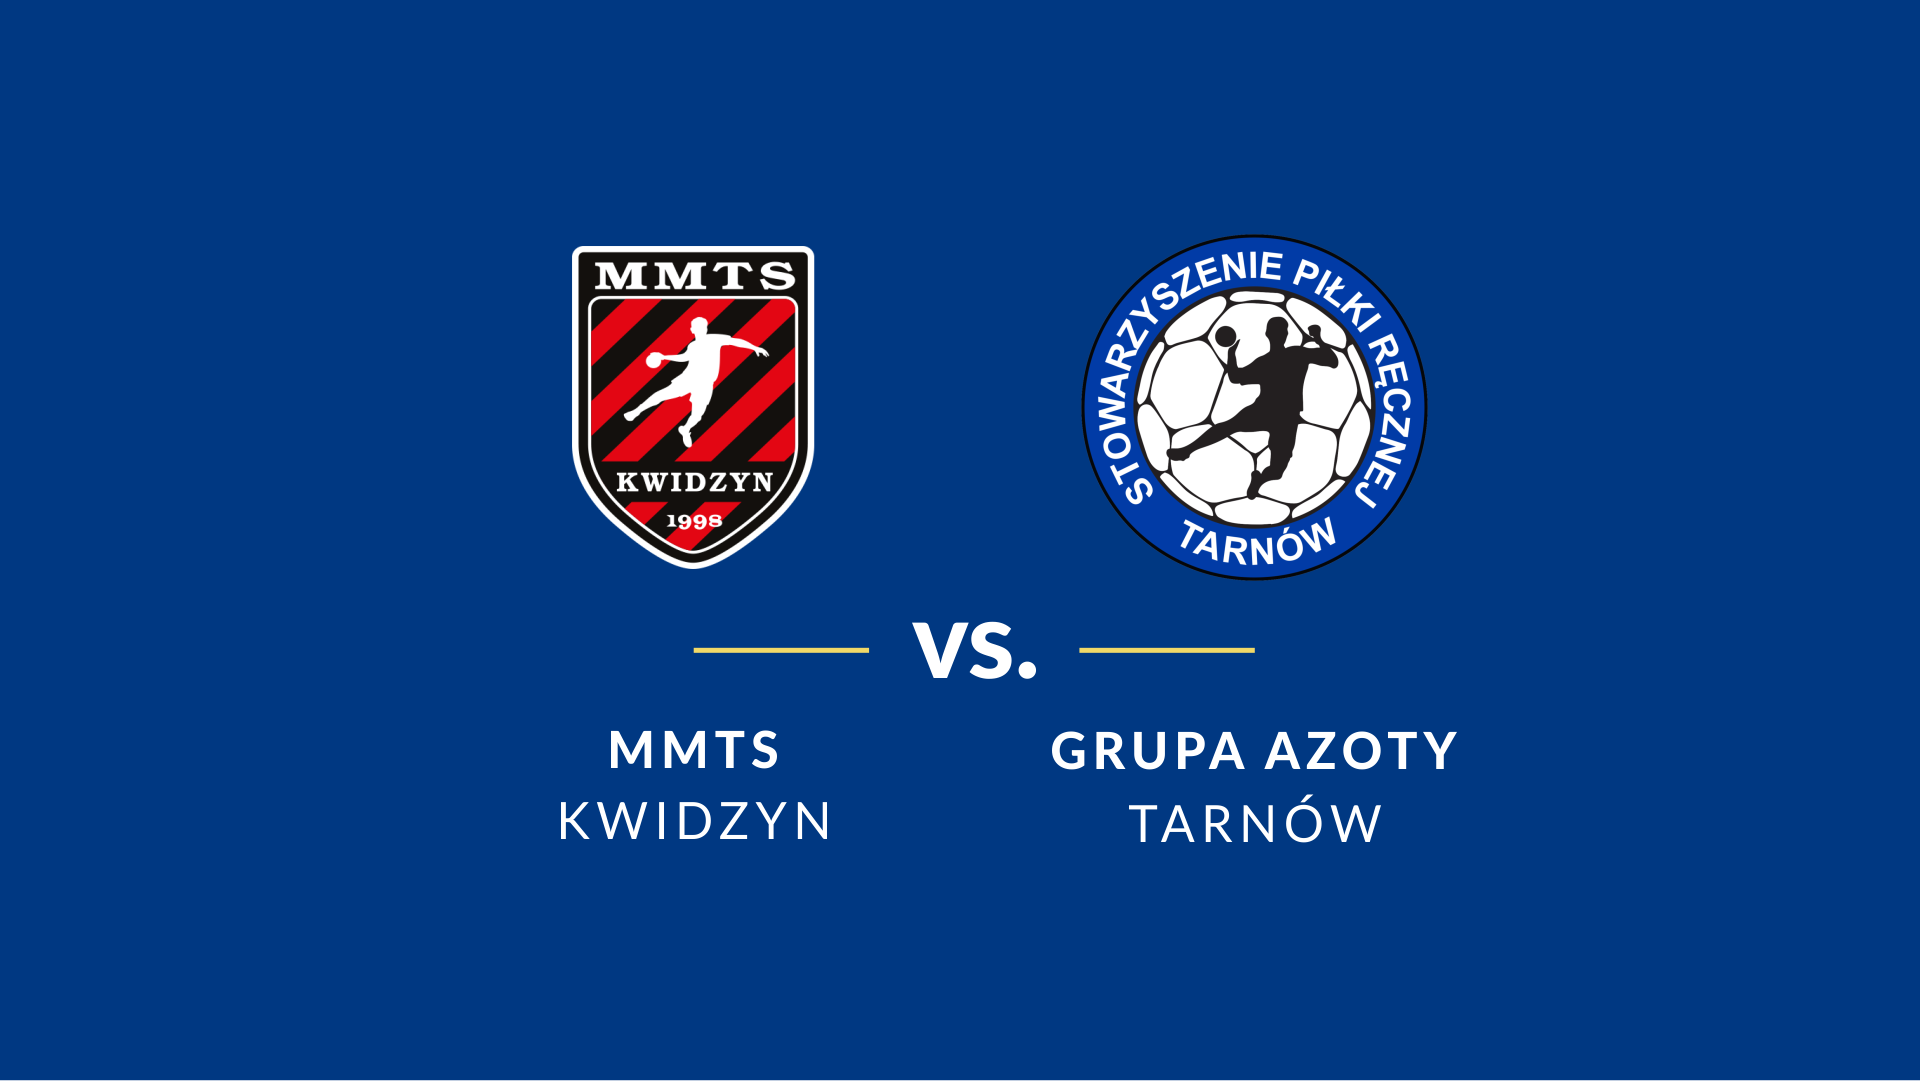 baner - logotypy Grupa Azoty Tarnów i MMTS Kwidzyn